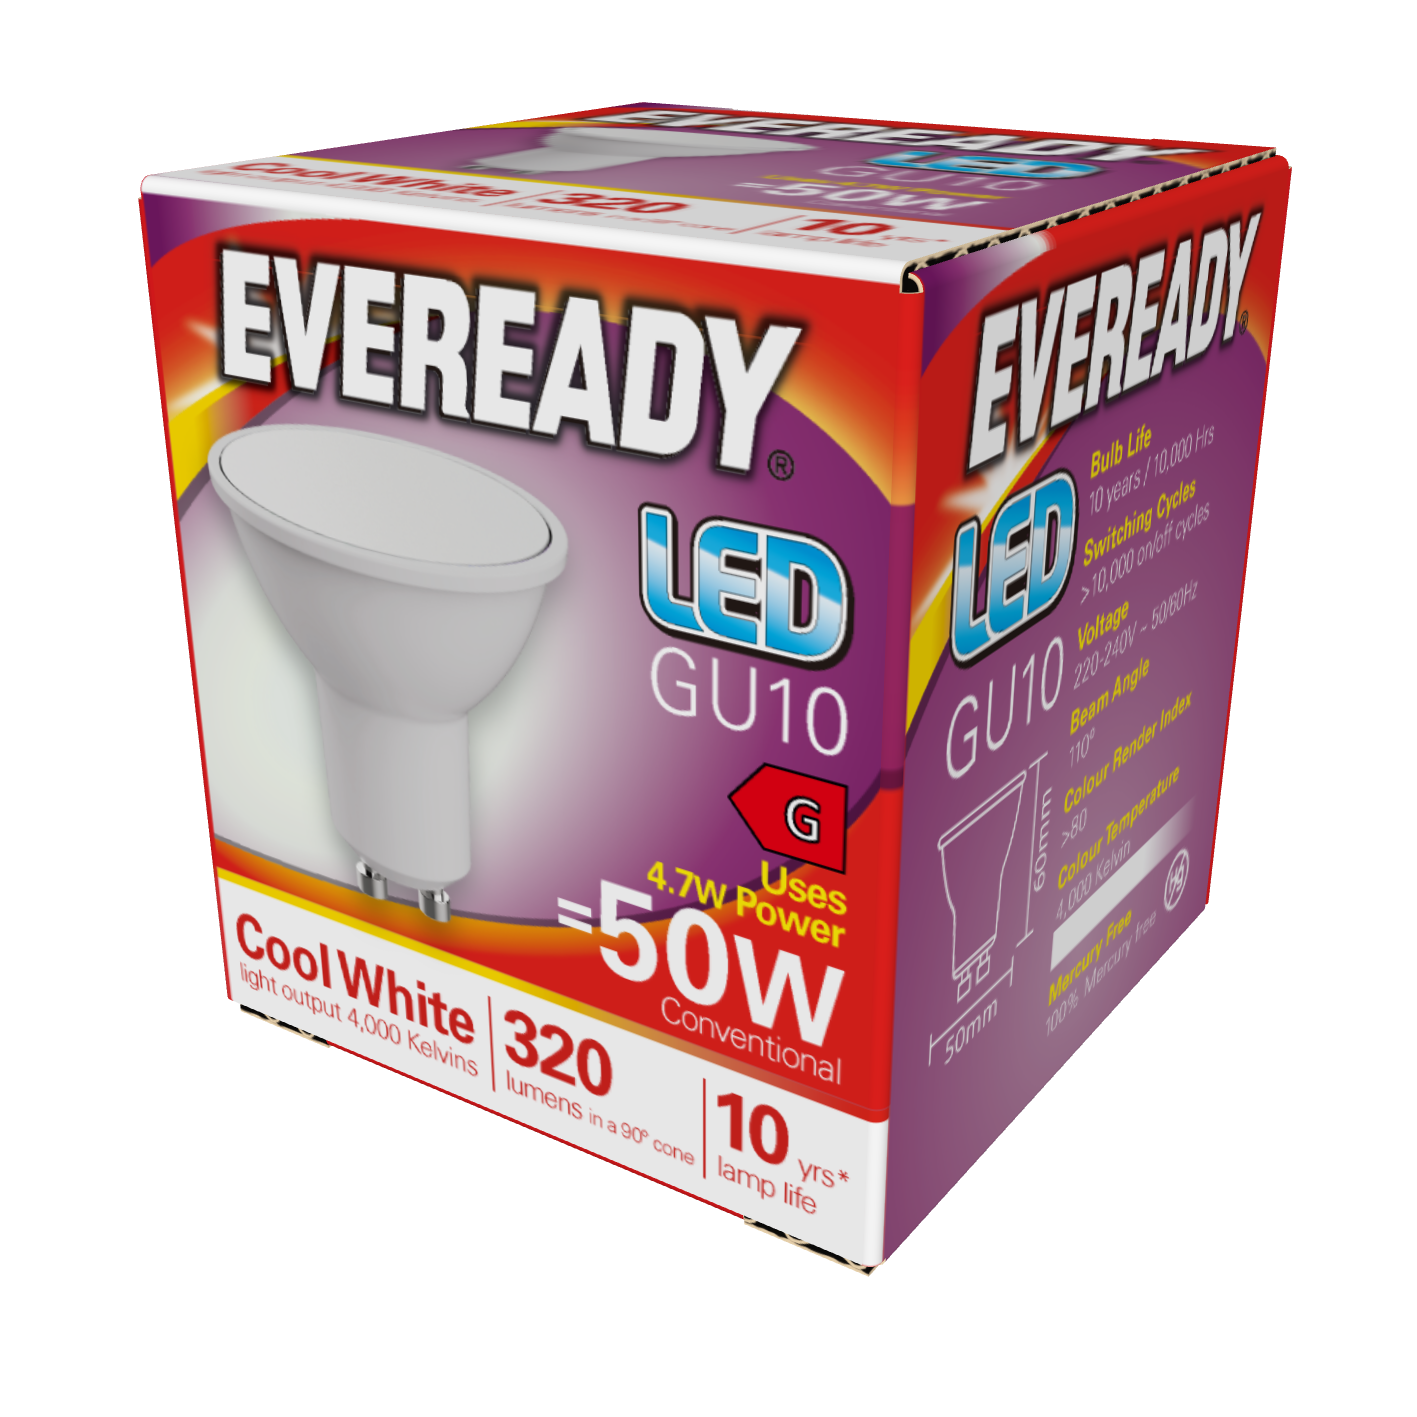 Eveready LED GU10 320lm 4.7W 4,000K (Cool White), Box of 1